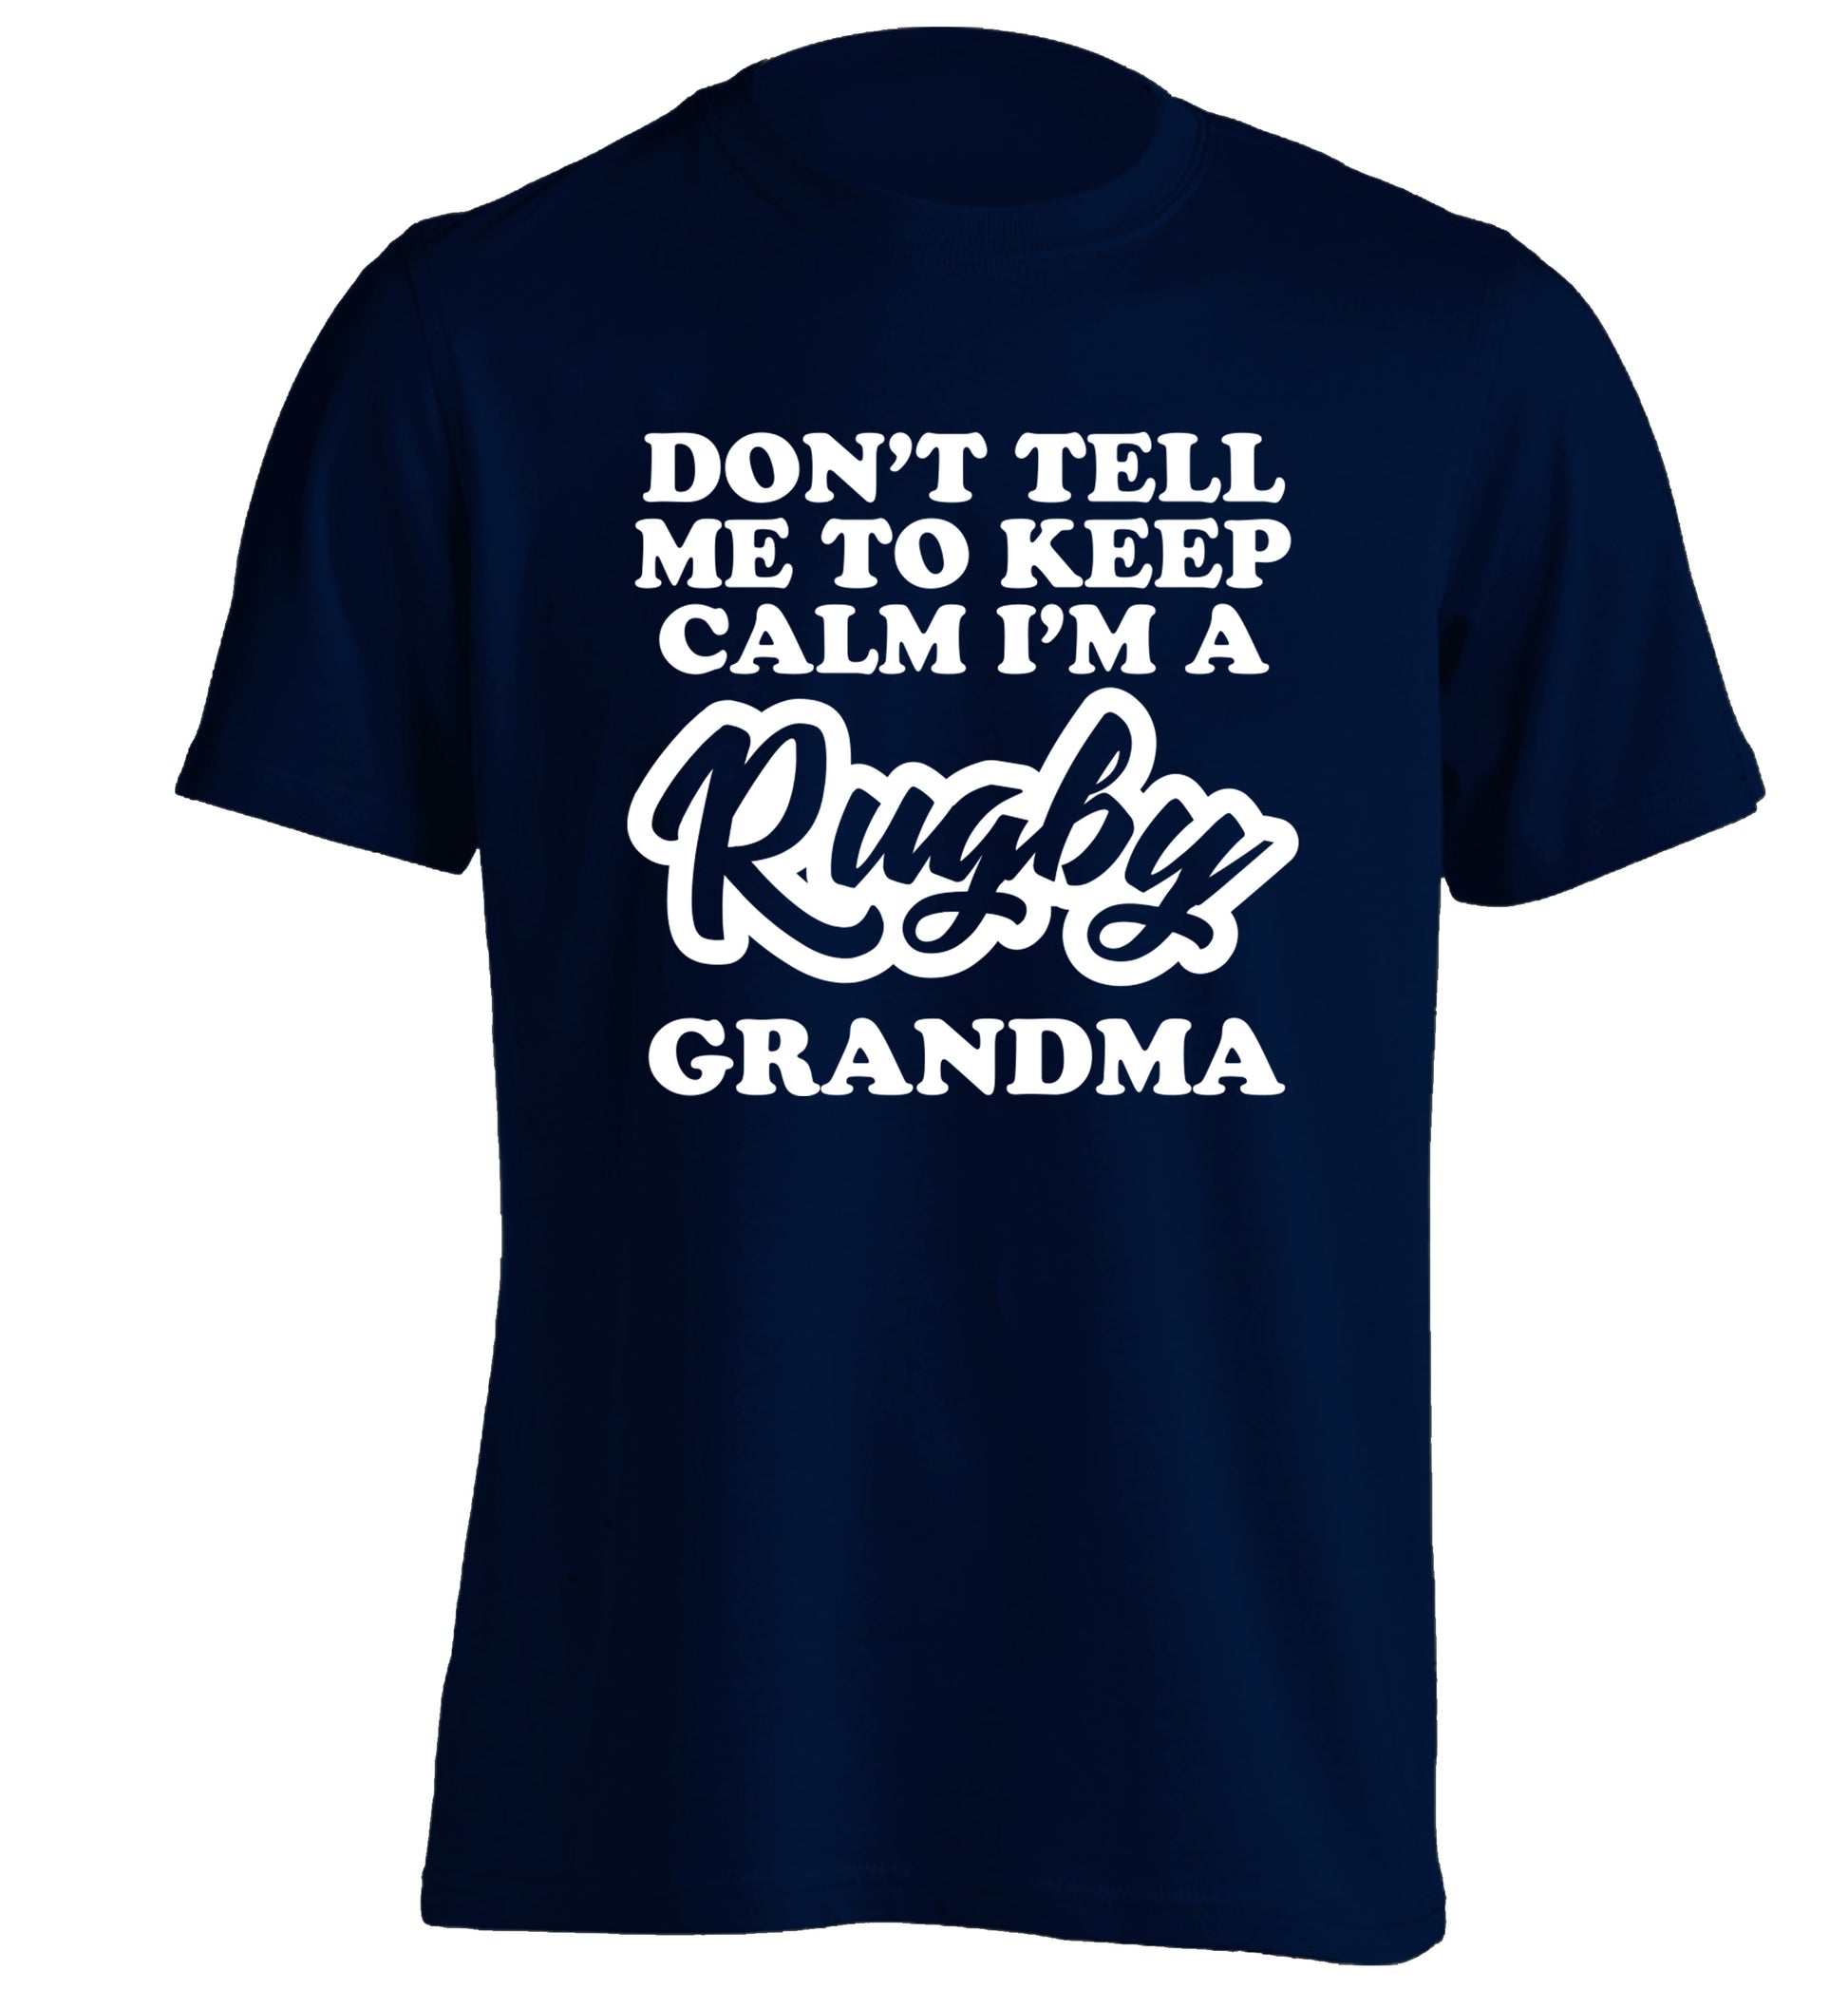 Don't tell me to keep calm I'm a rugby grandma adults unisex navy Tshirt 2XL